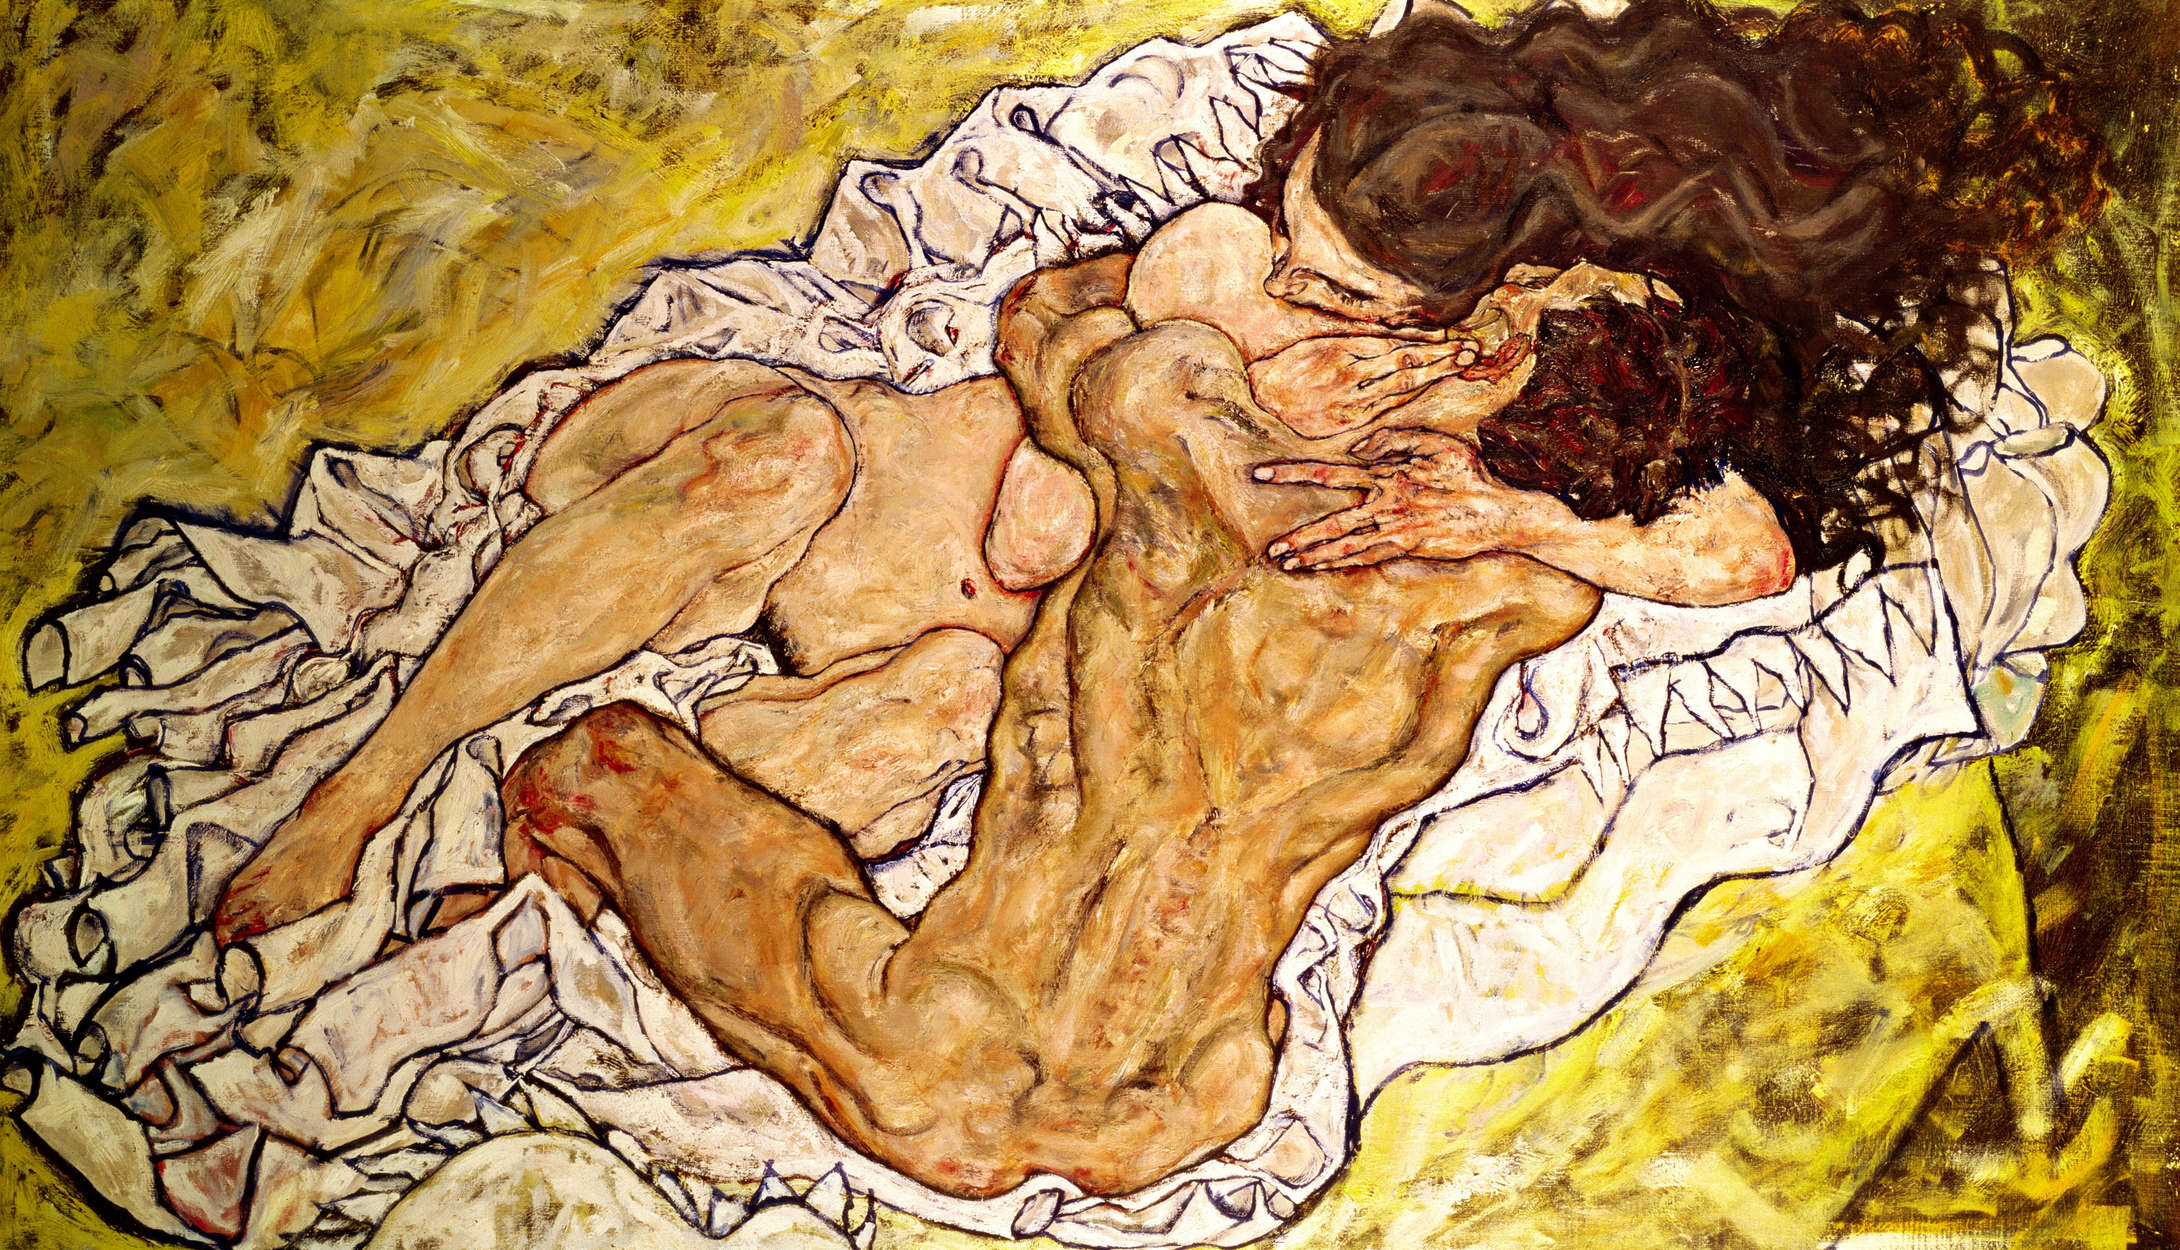             Photo wallpaper "The embrace" by Egon Schiele
        